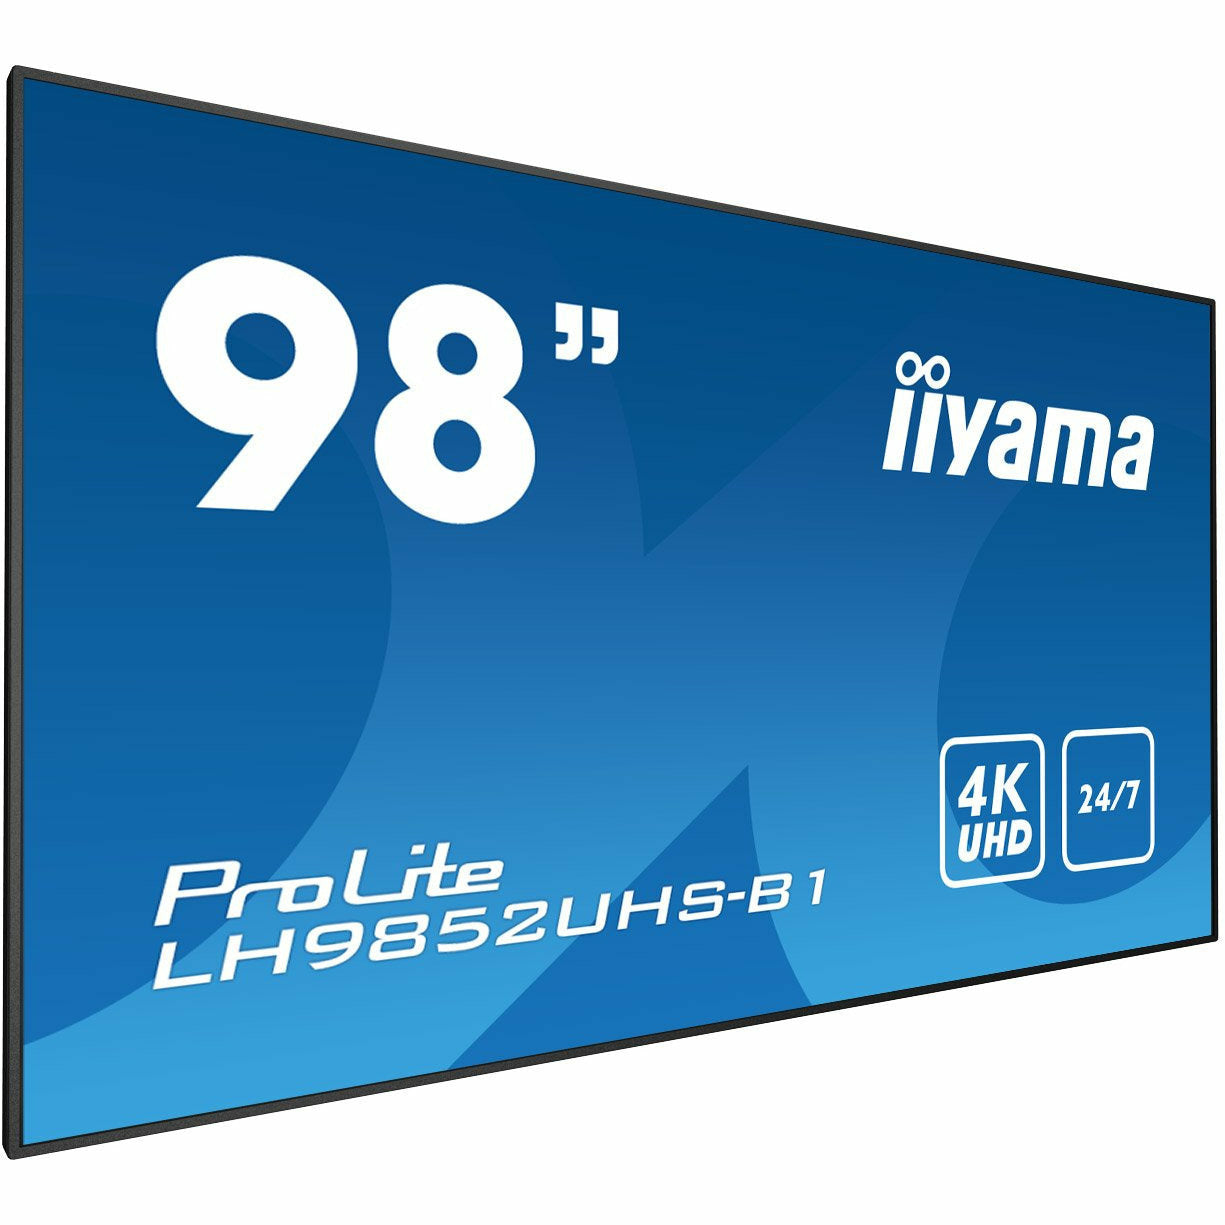 iiyama ProLite LH9852UHS-B1 98" 4K Professional Digital Signage 24/7 LFD - image 2 of 19